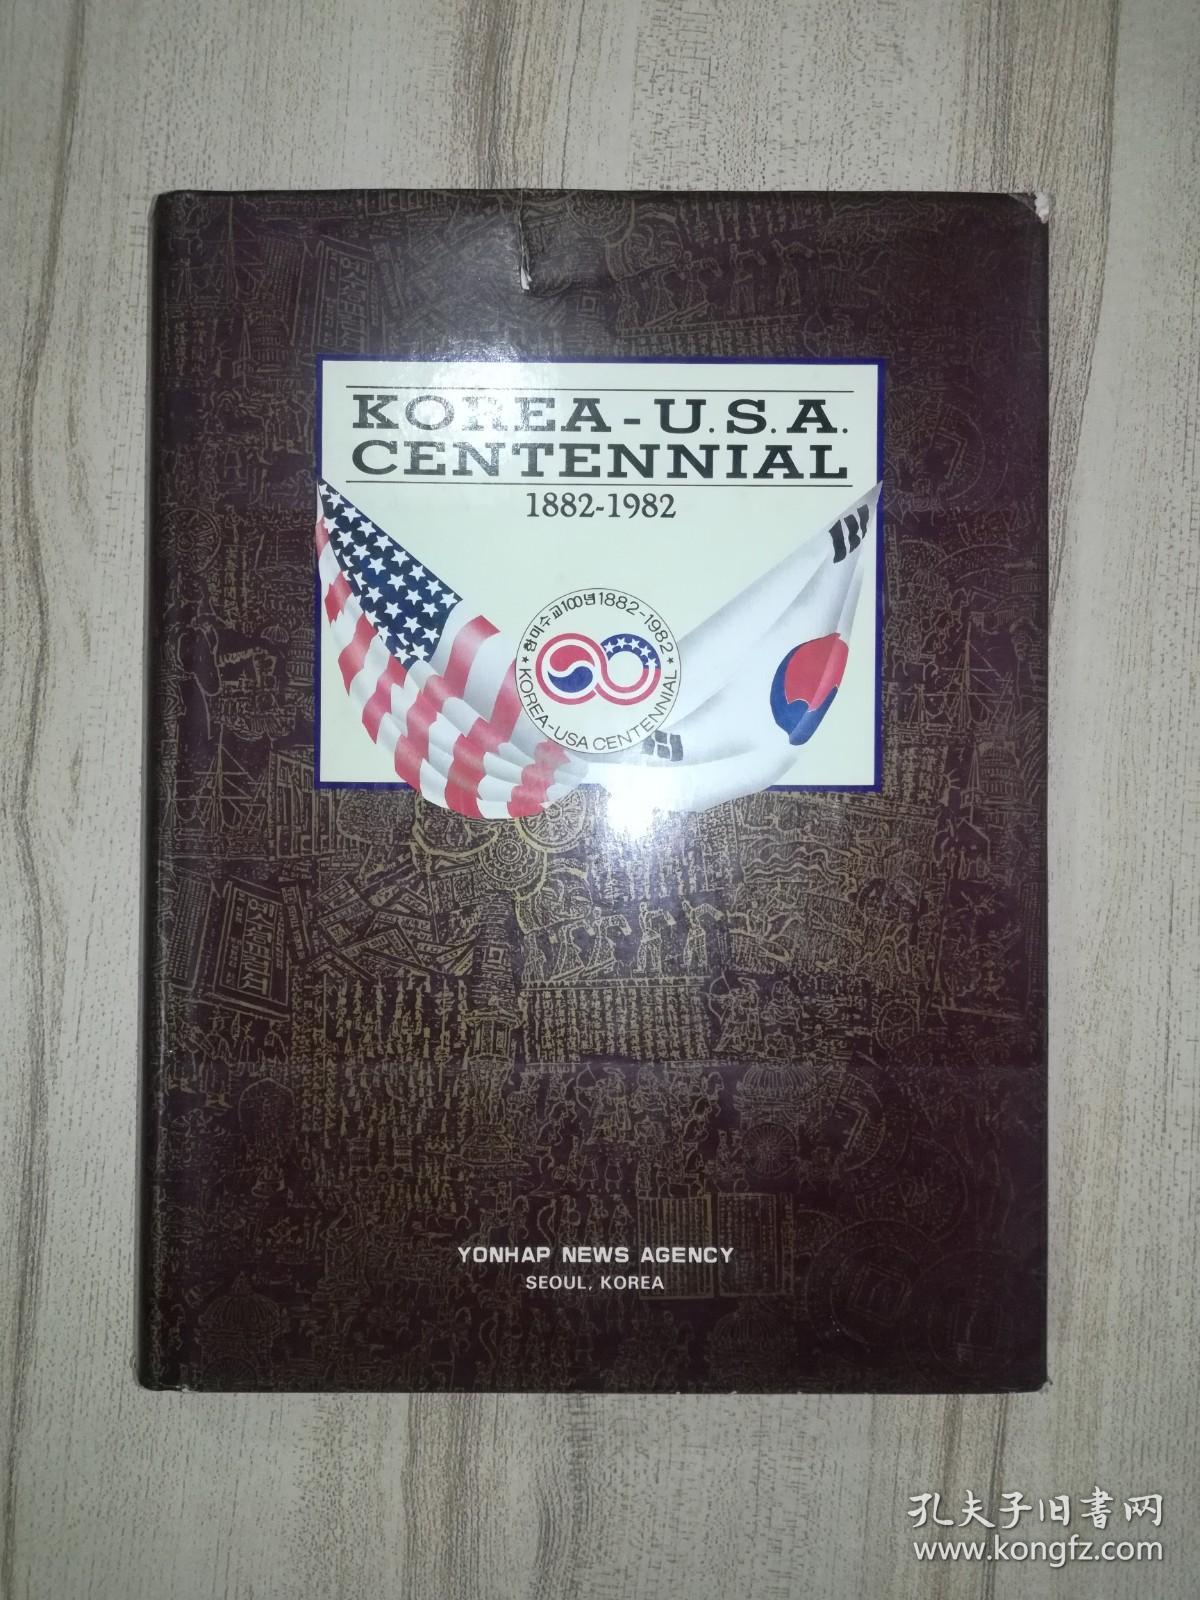 Korea-U.S.A. Centennial. 1882-1982